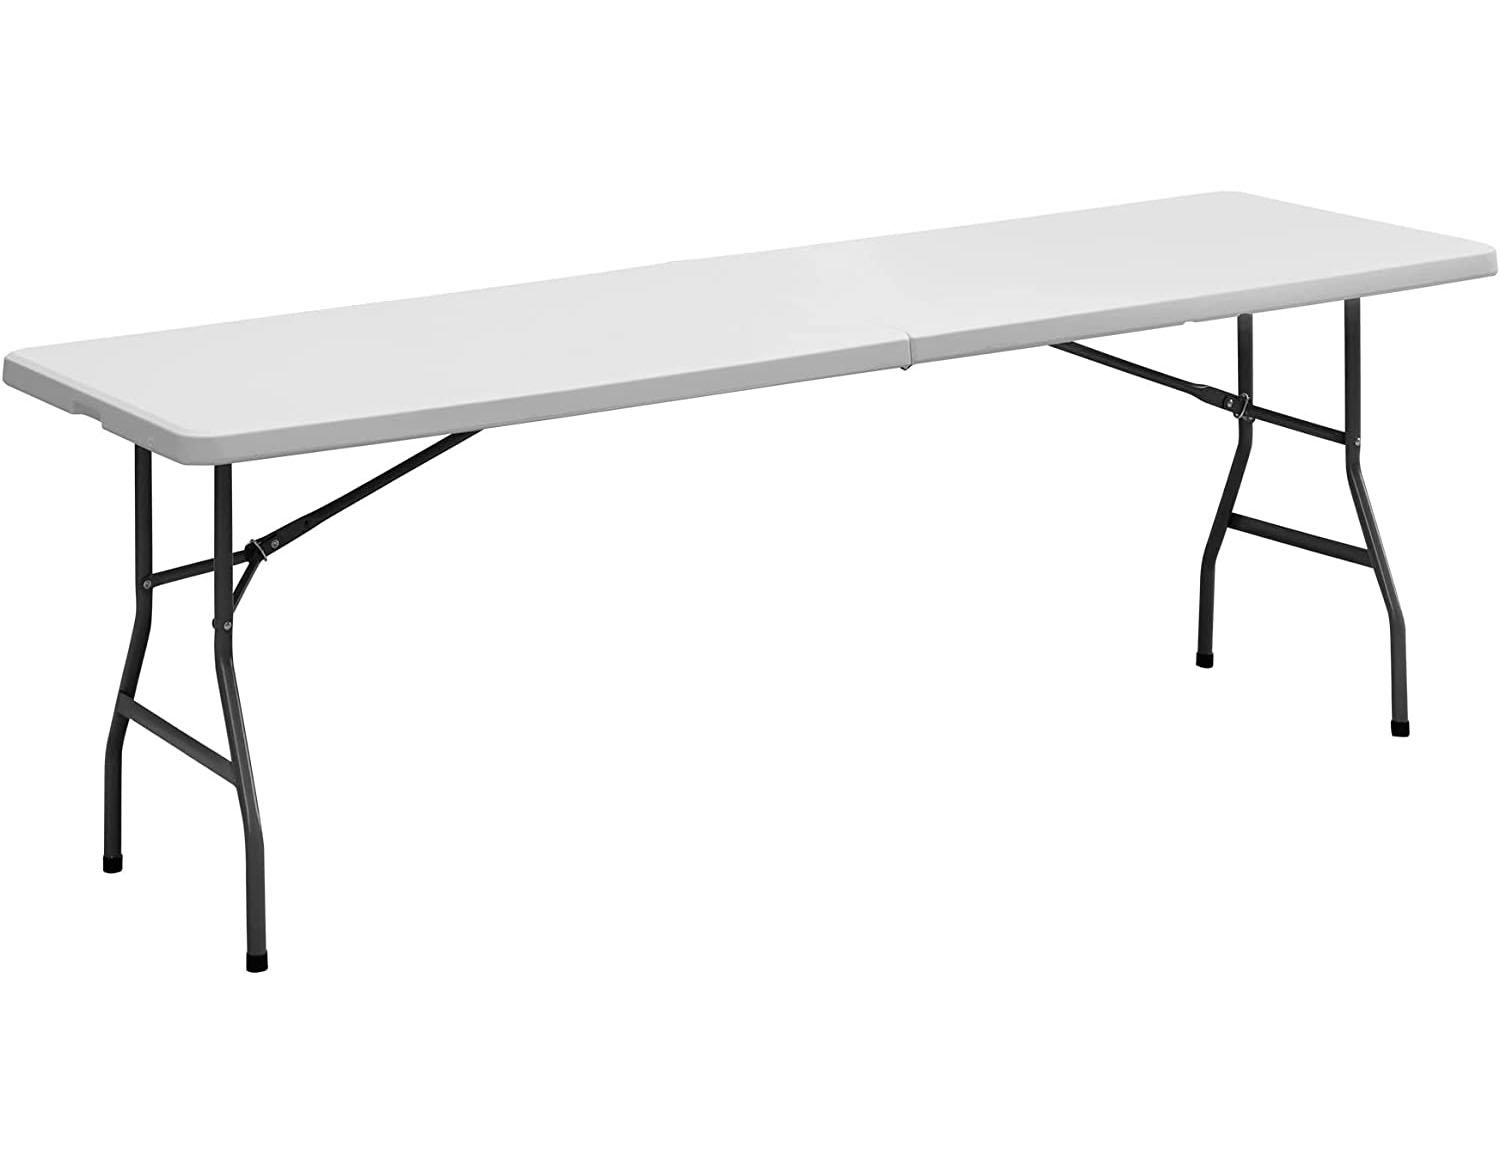 8' Folding Table